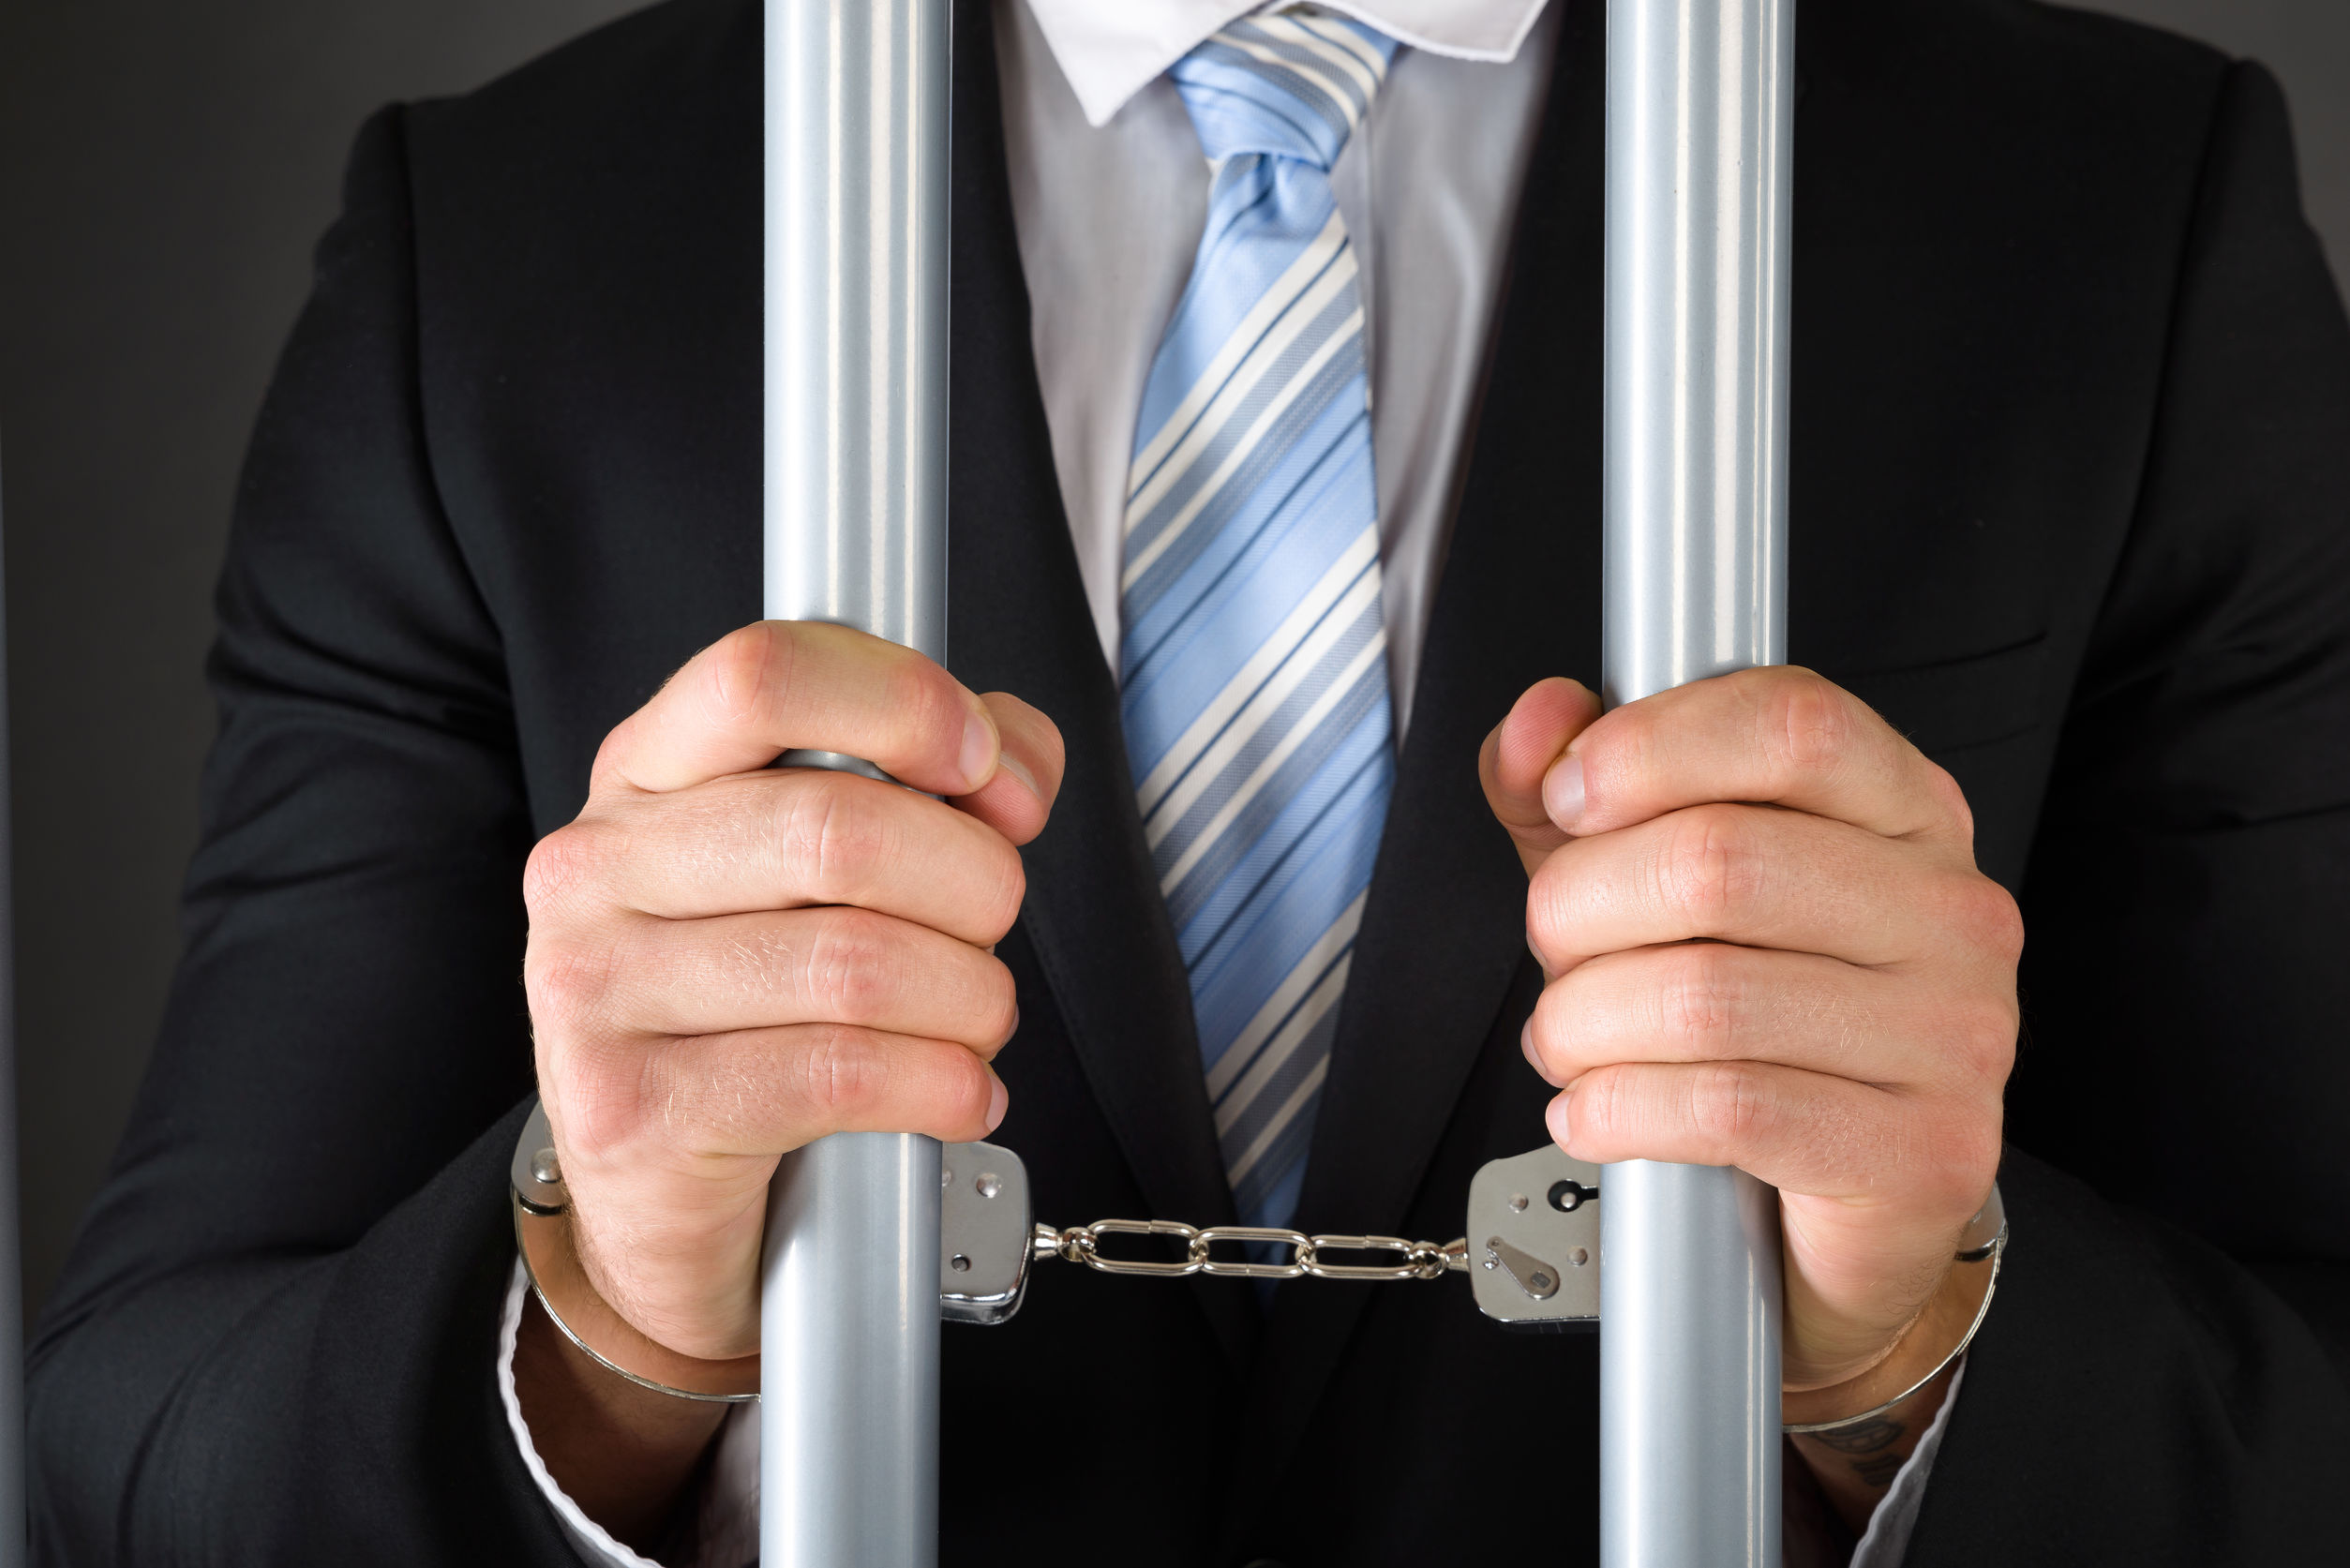 Handcuffed Businessman Holding Bars